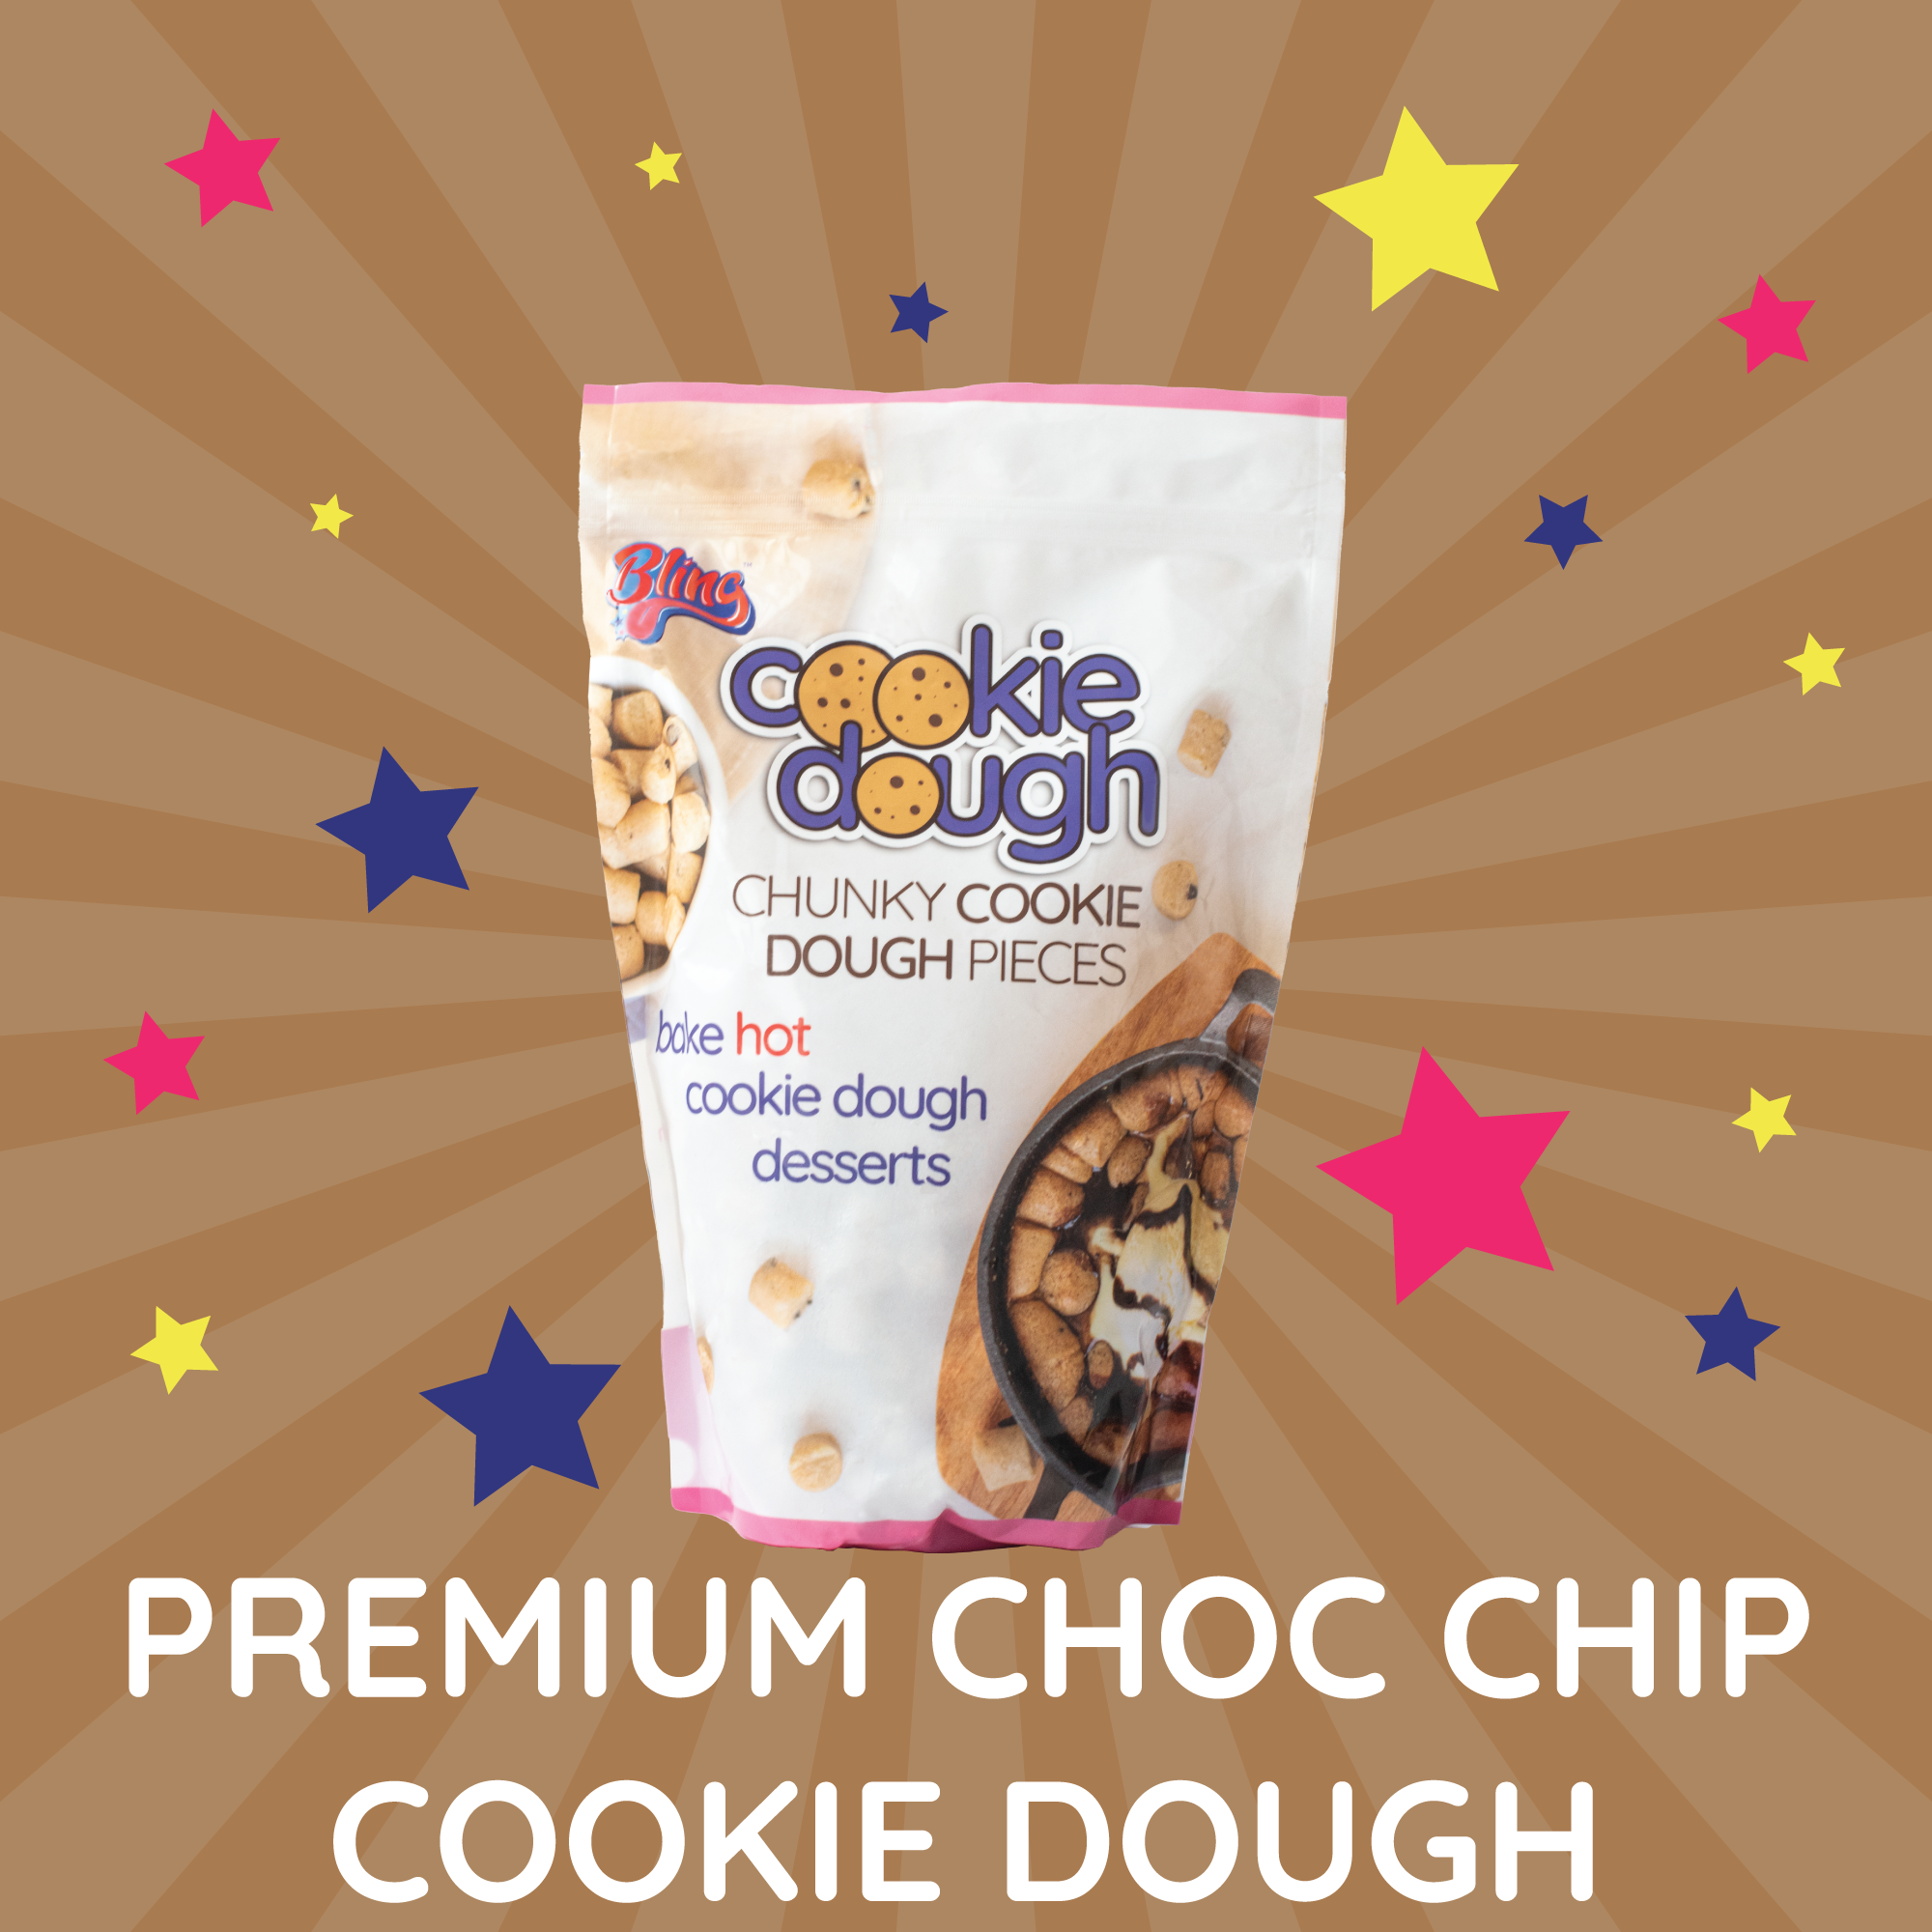 Premium Choc Chip Cookie Dough Pouch